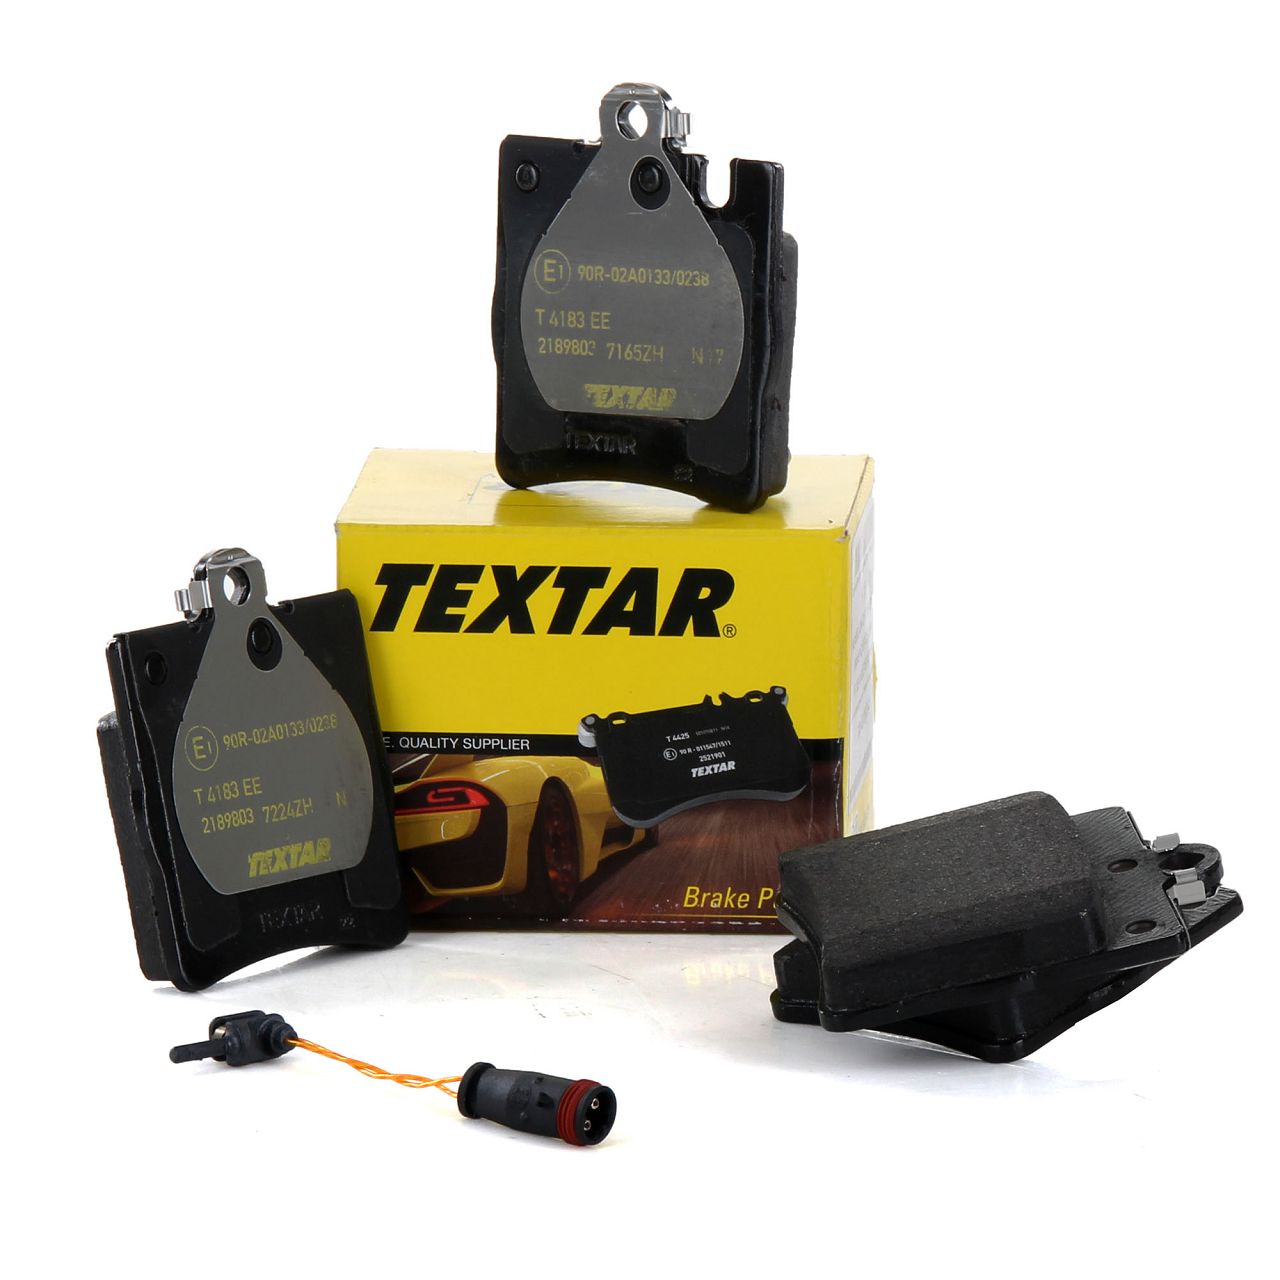 TEXTAR 2189803 Bremsbeläge + Wako MERCEDES W203 S203 CL203 C209 A209 R171 hinten